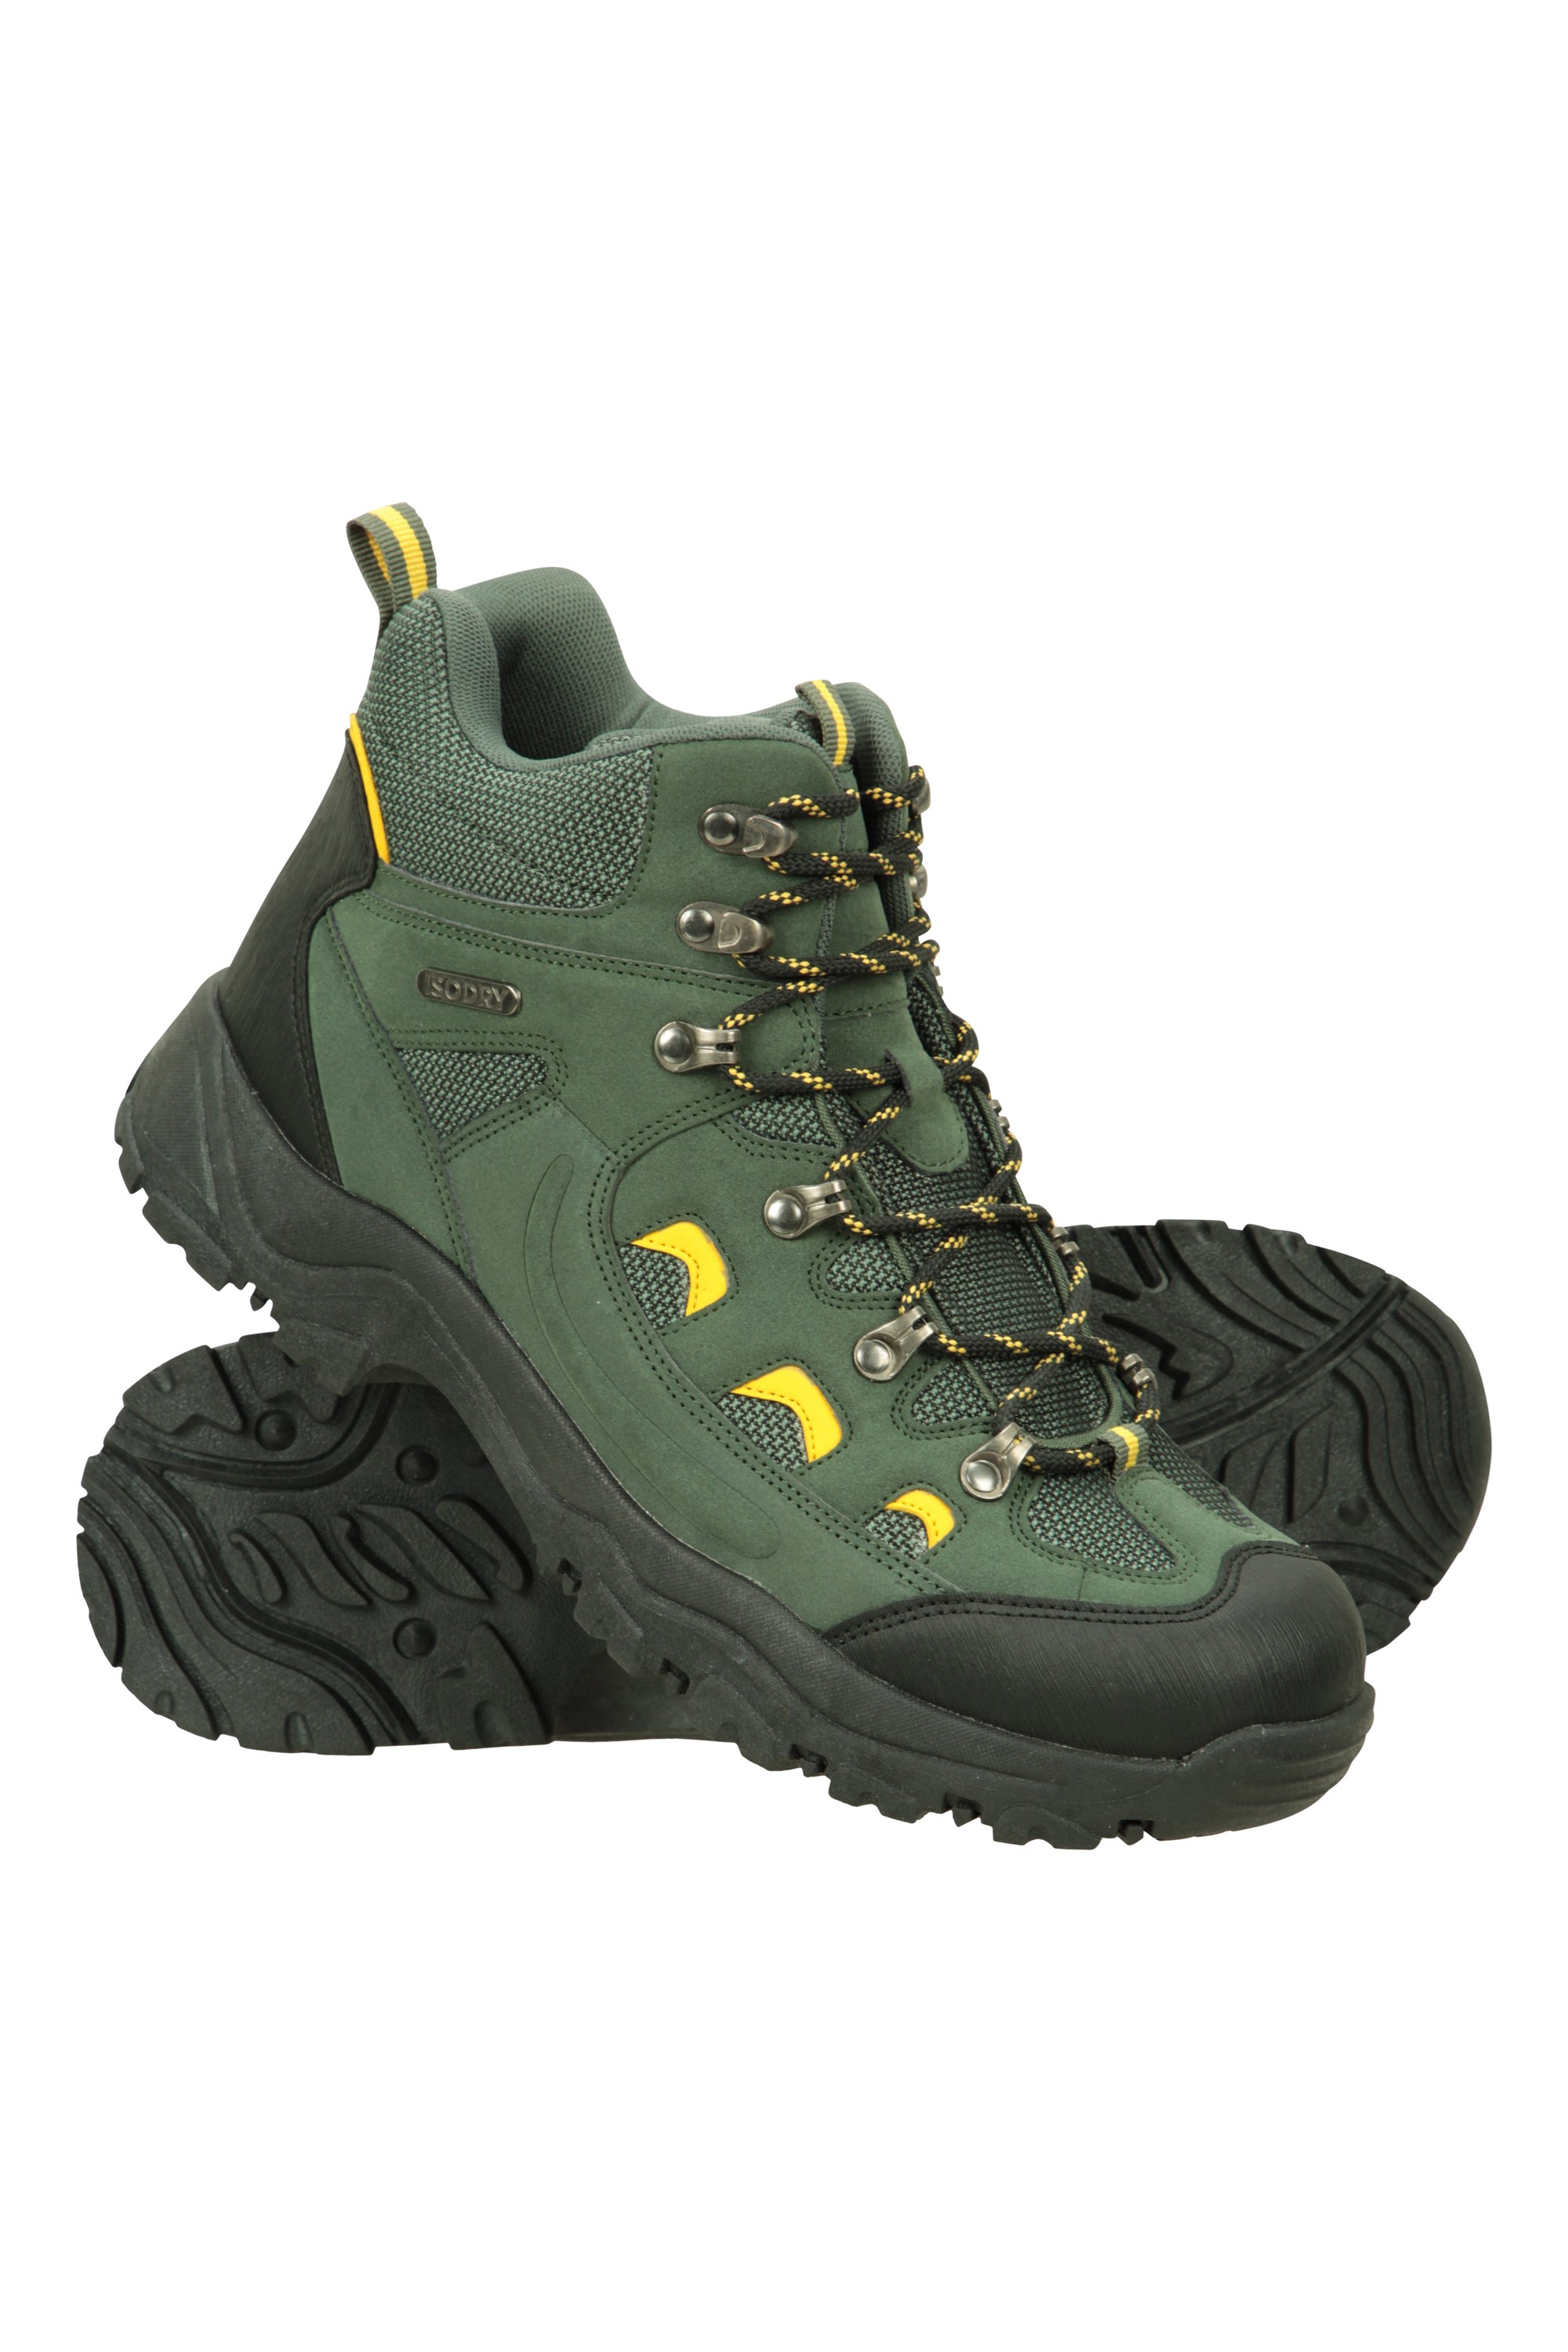 Mountain Warehouse MOUNTAIN WAREHOUSE Mens Black ADVENTURER Waterproof Hiking  Boots Size UK 7.5 